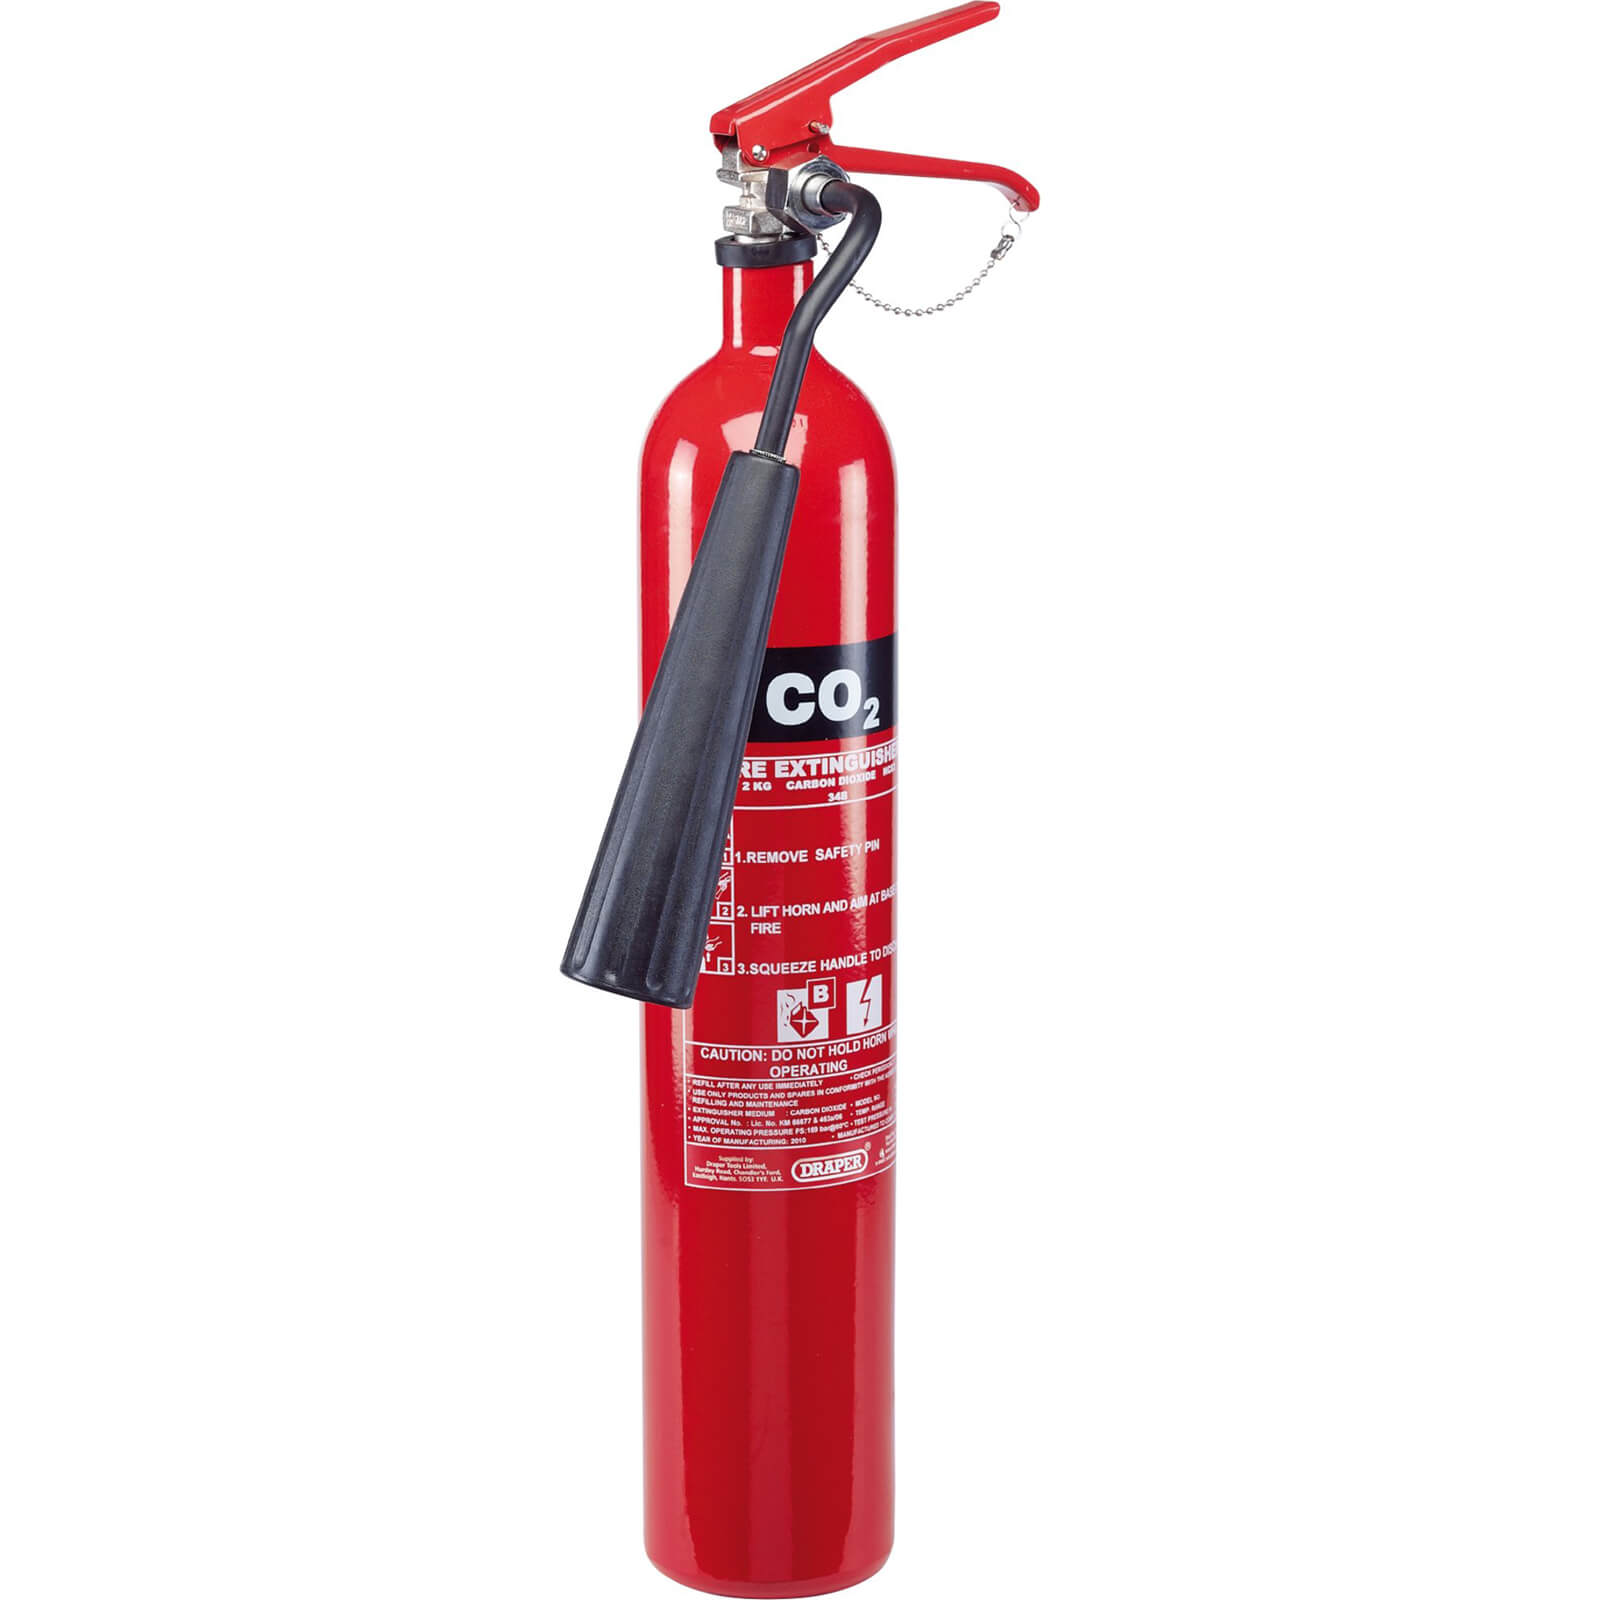 Draper Carbon Dioxide Fire Extinguisher